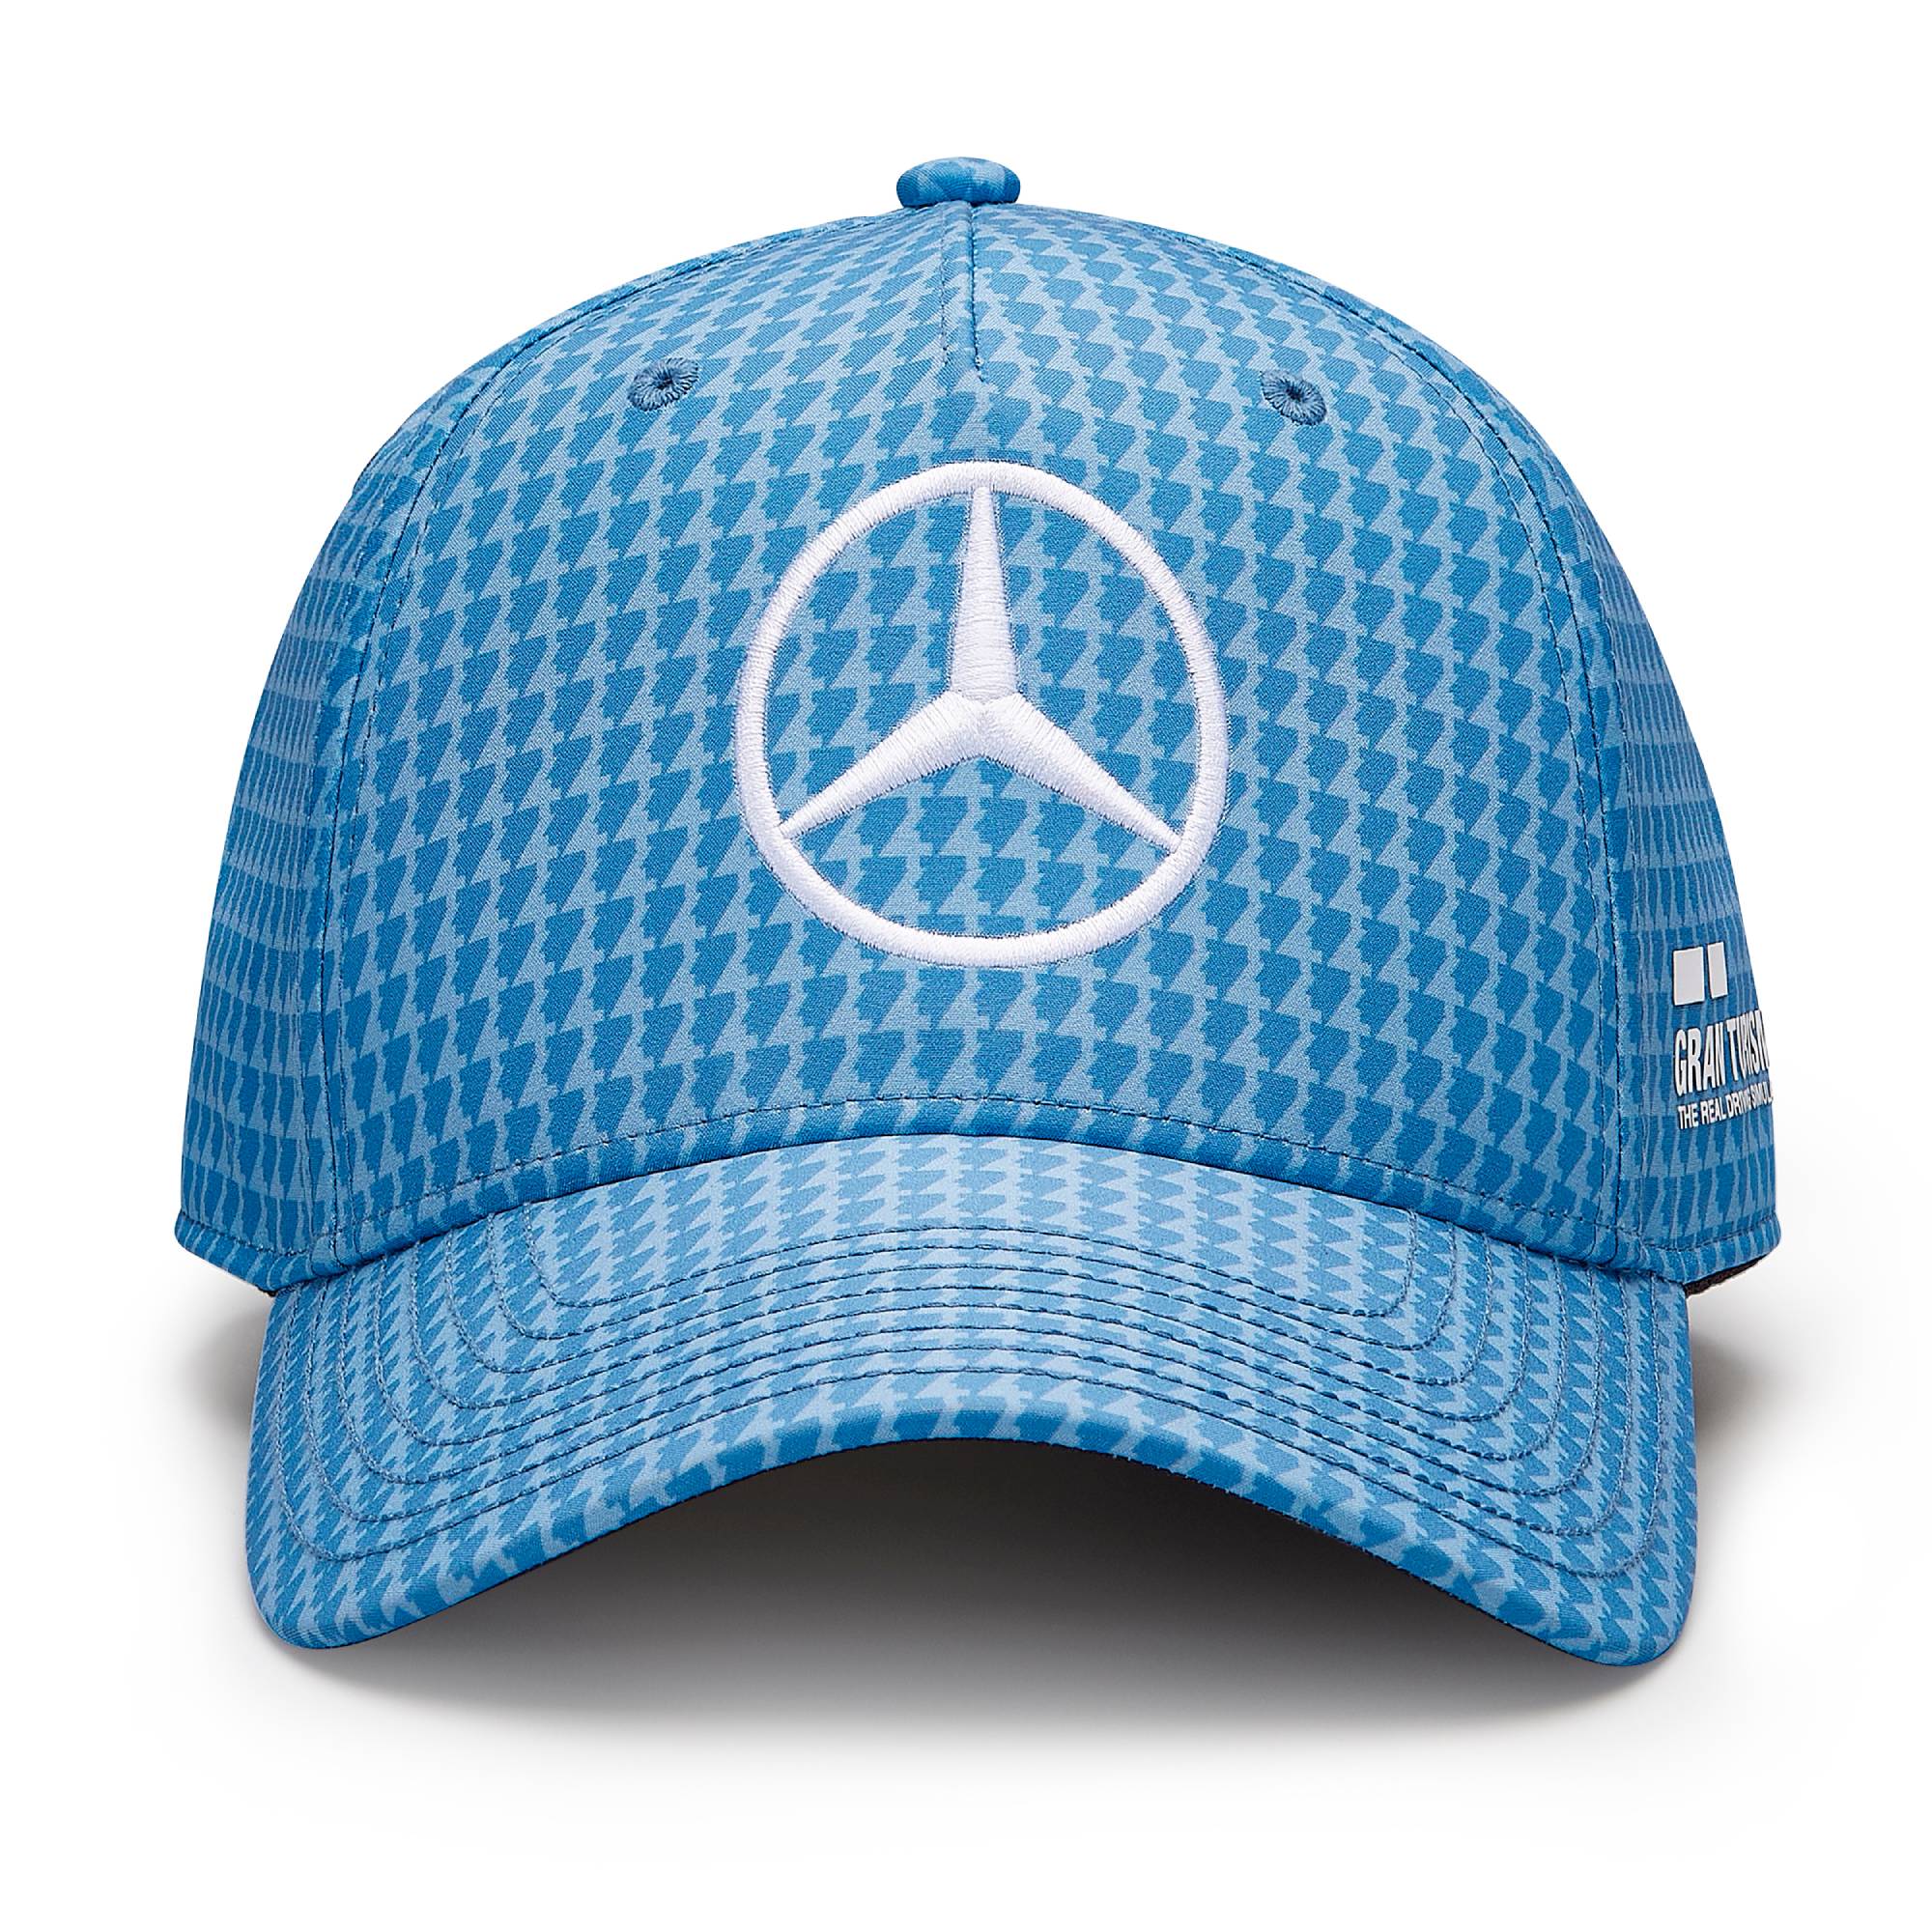 Mercedes AMG Lewis Hamilton Fahrerkappe - blau